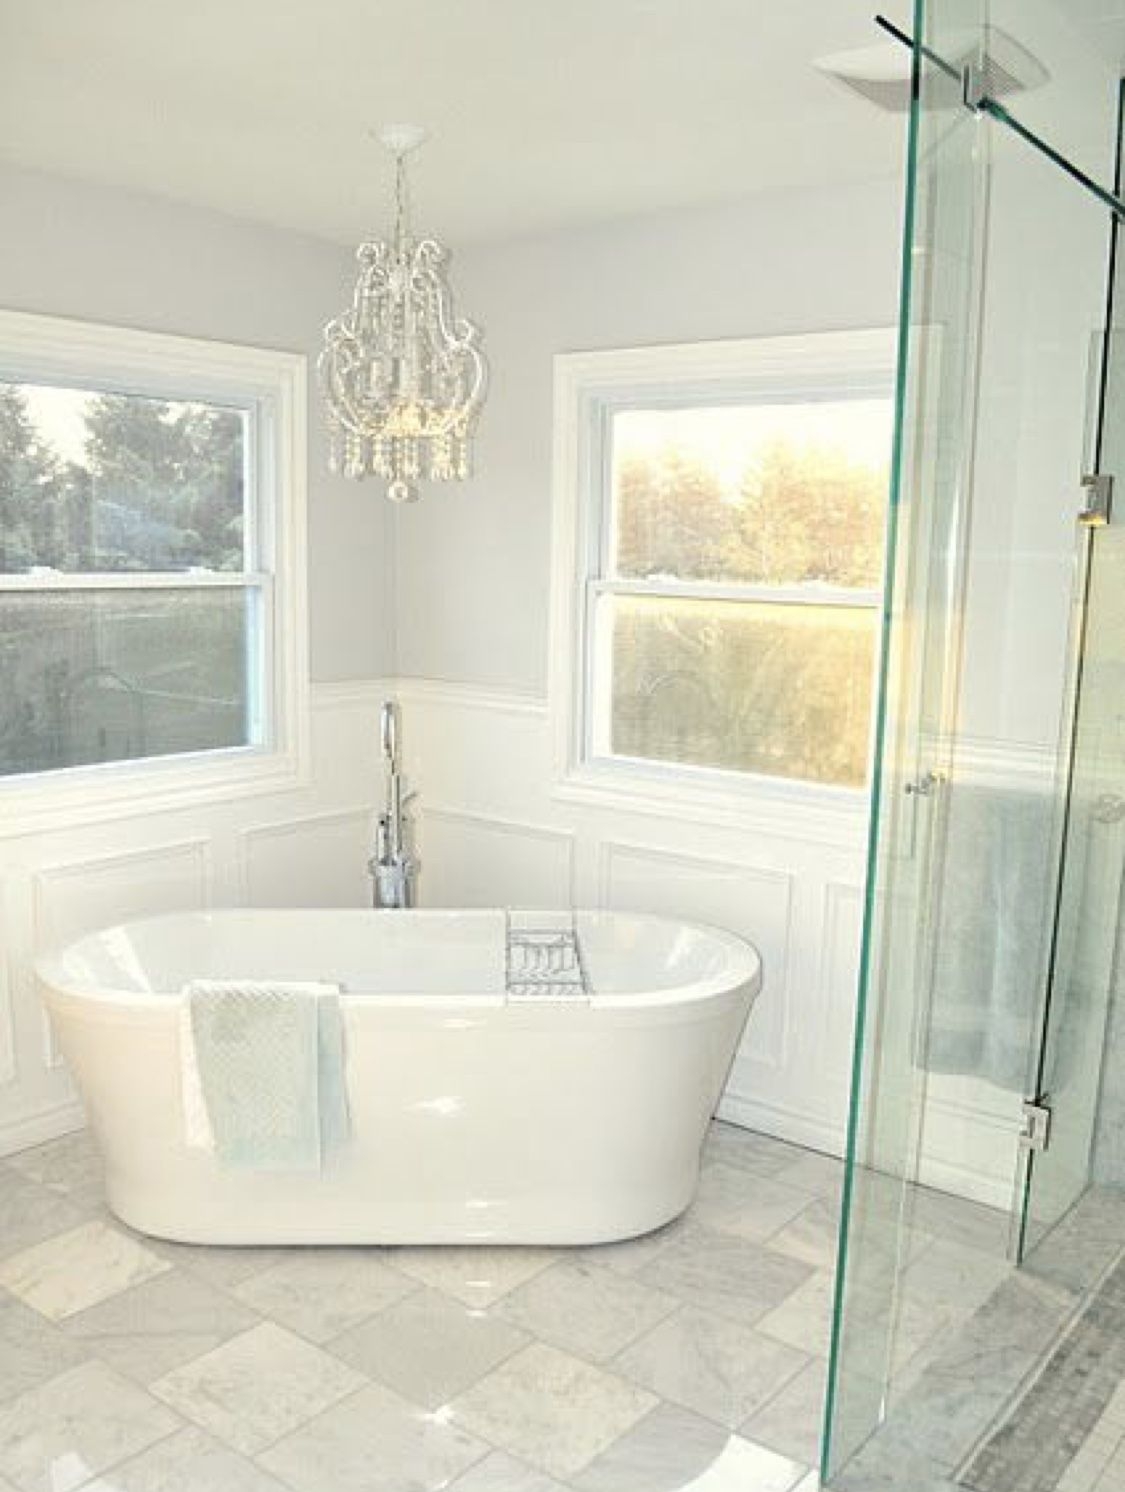 Idea for master bath love this big soaking tub